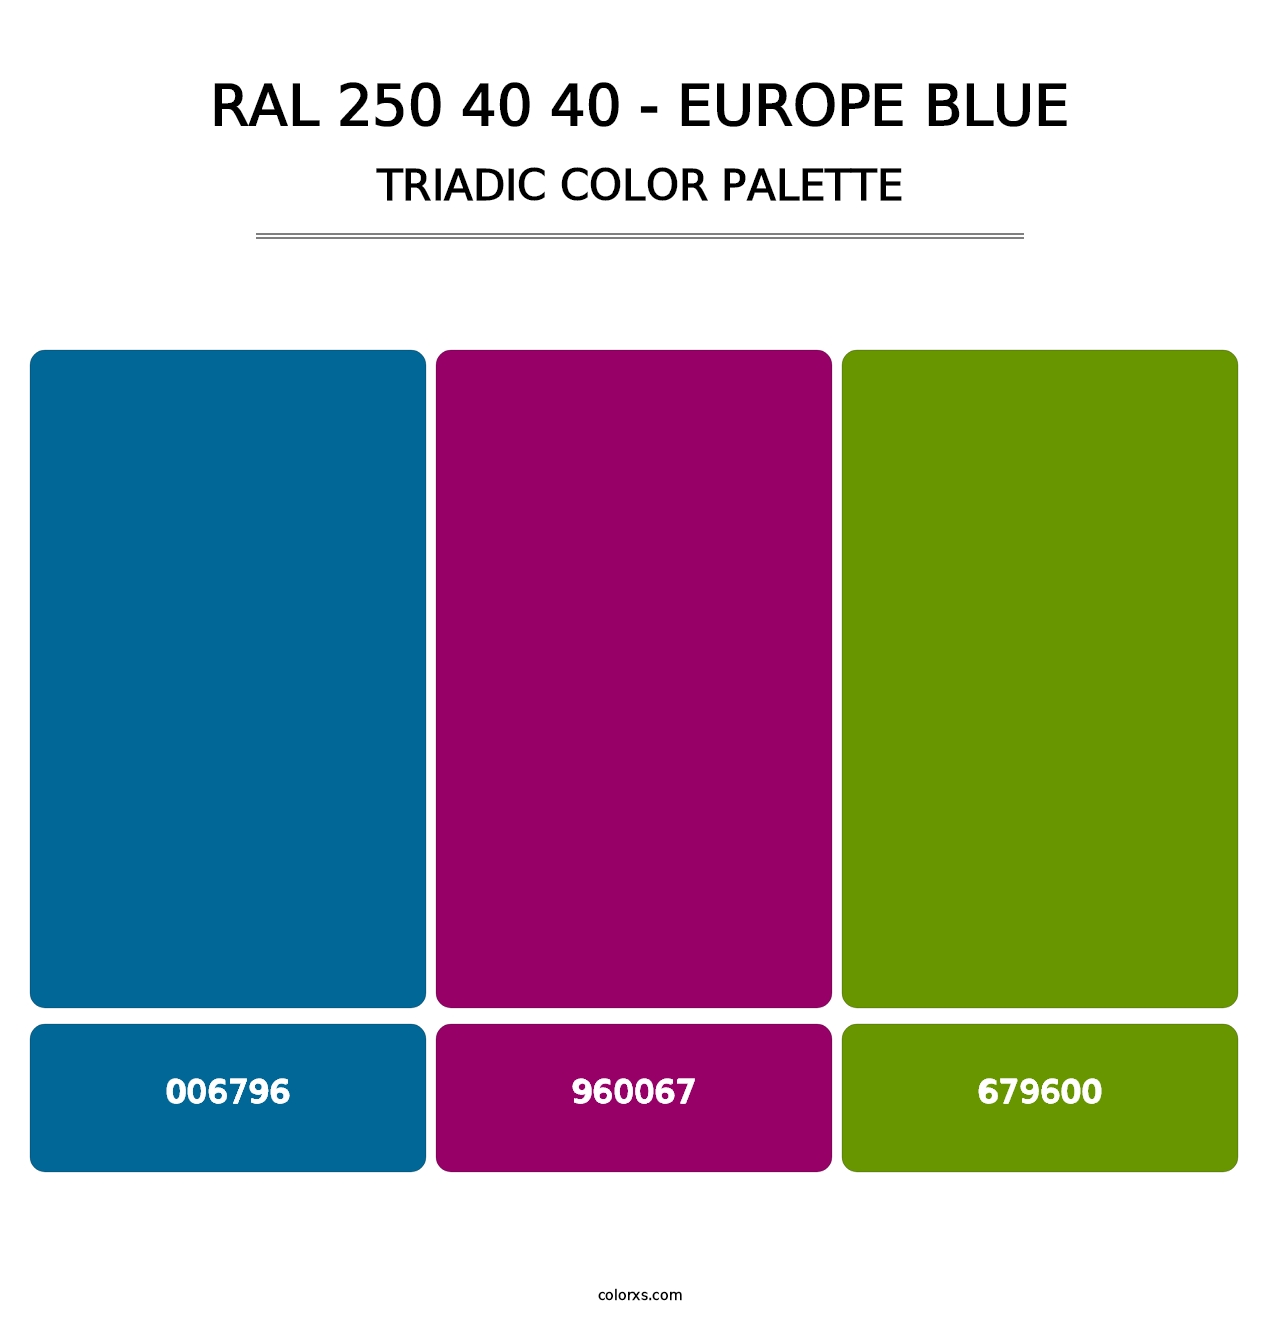 RAL 250 40 40 - Europe Blue - Triadic Color Palette